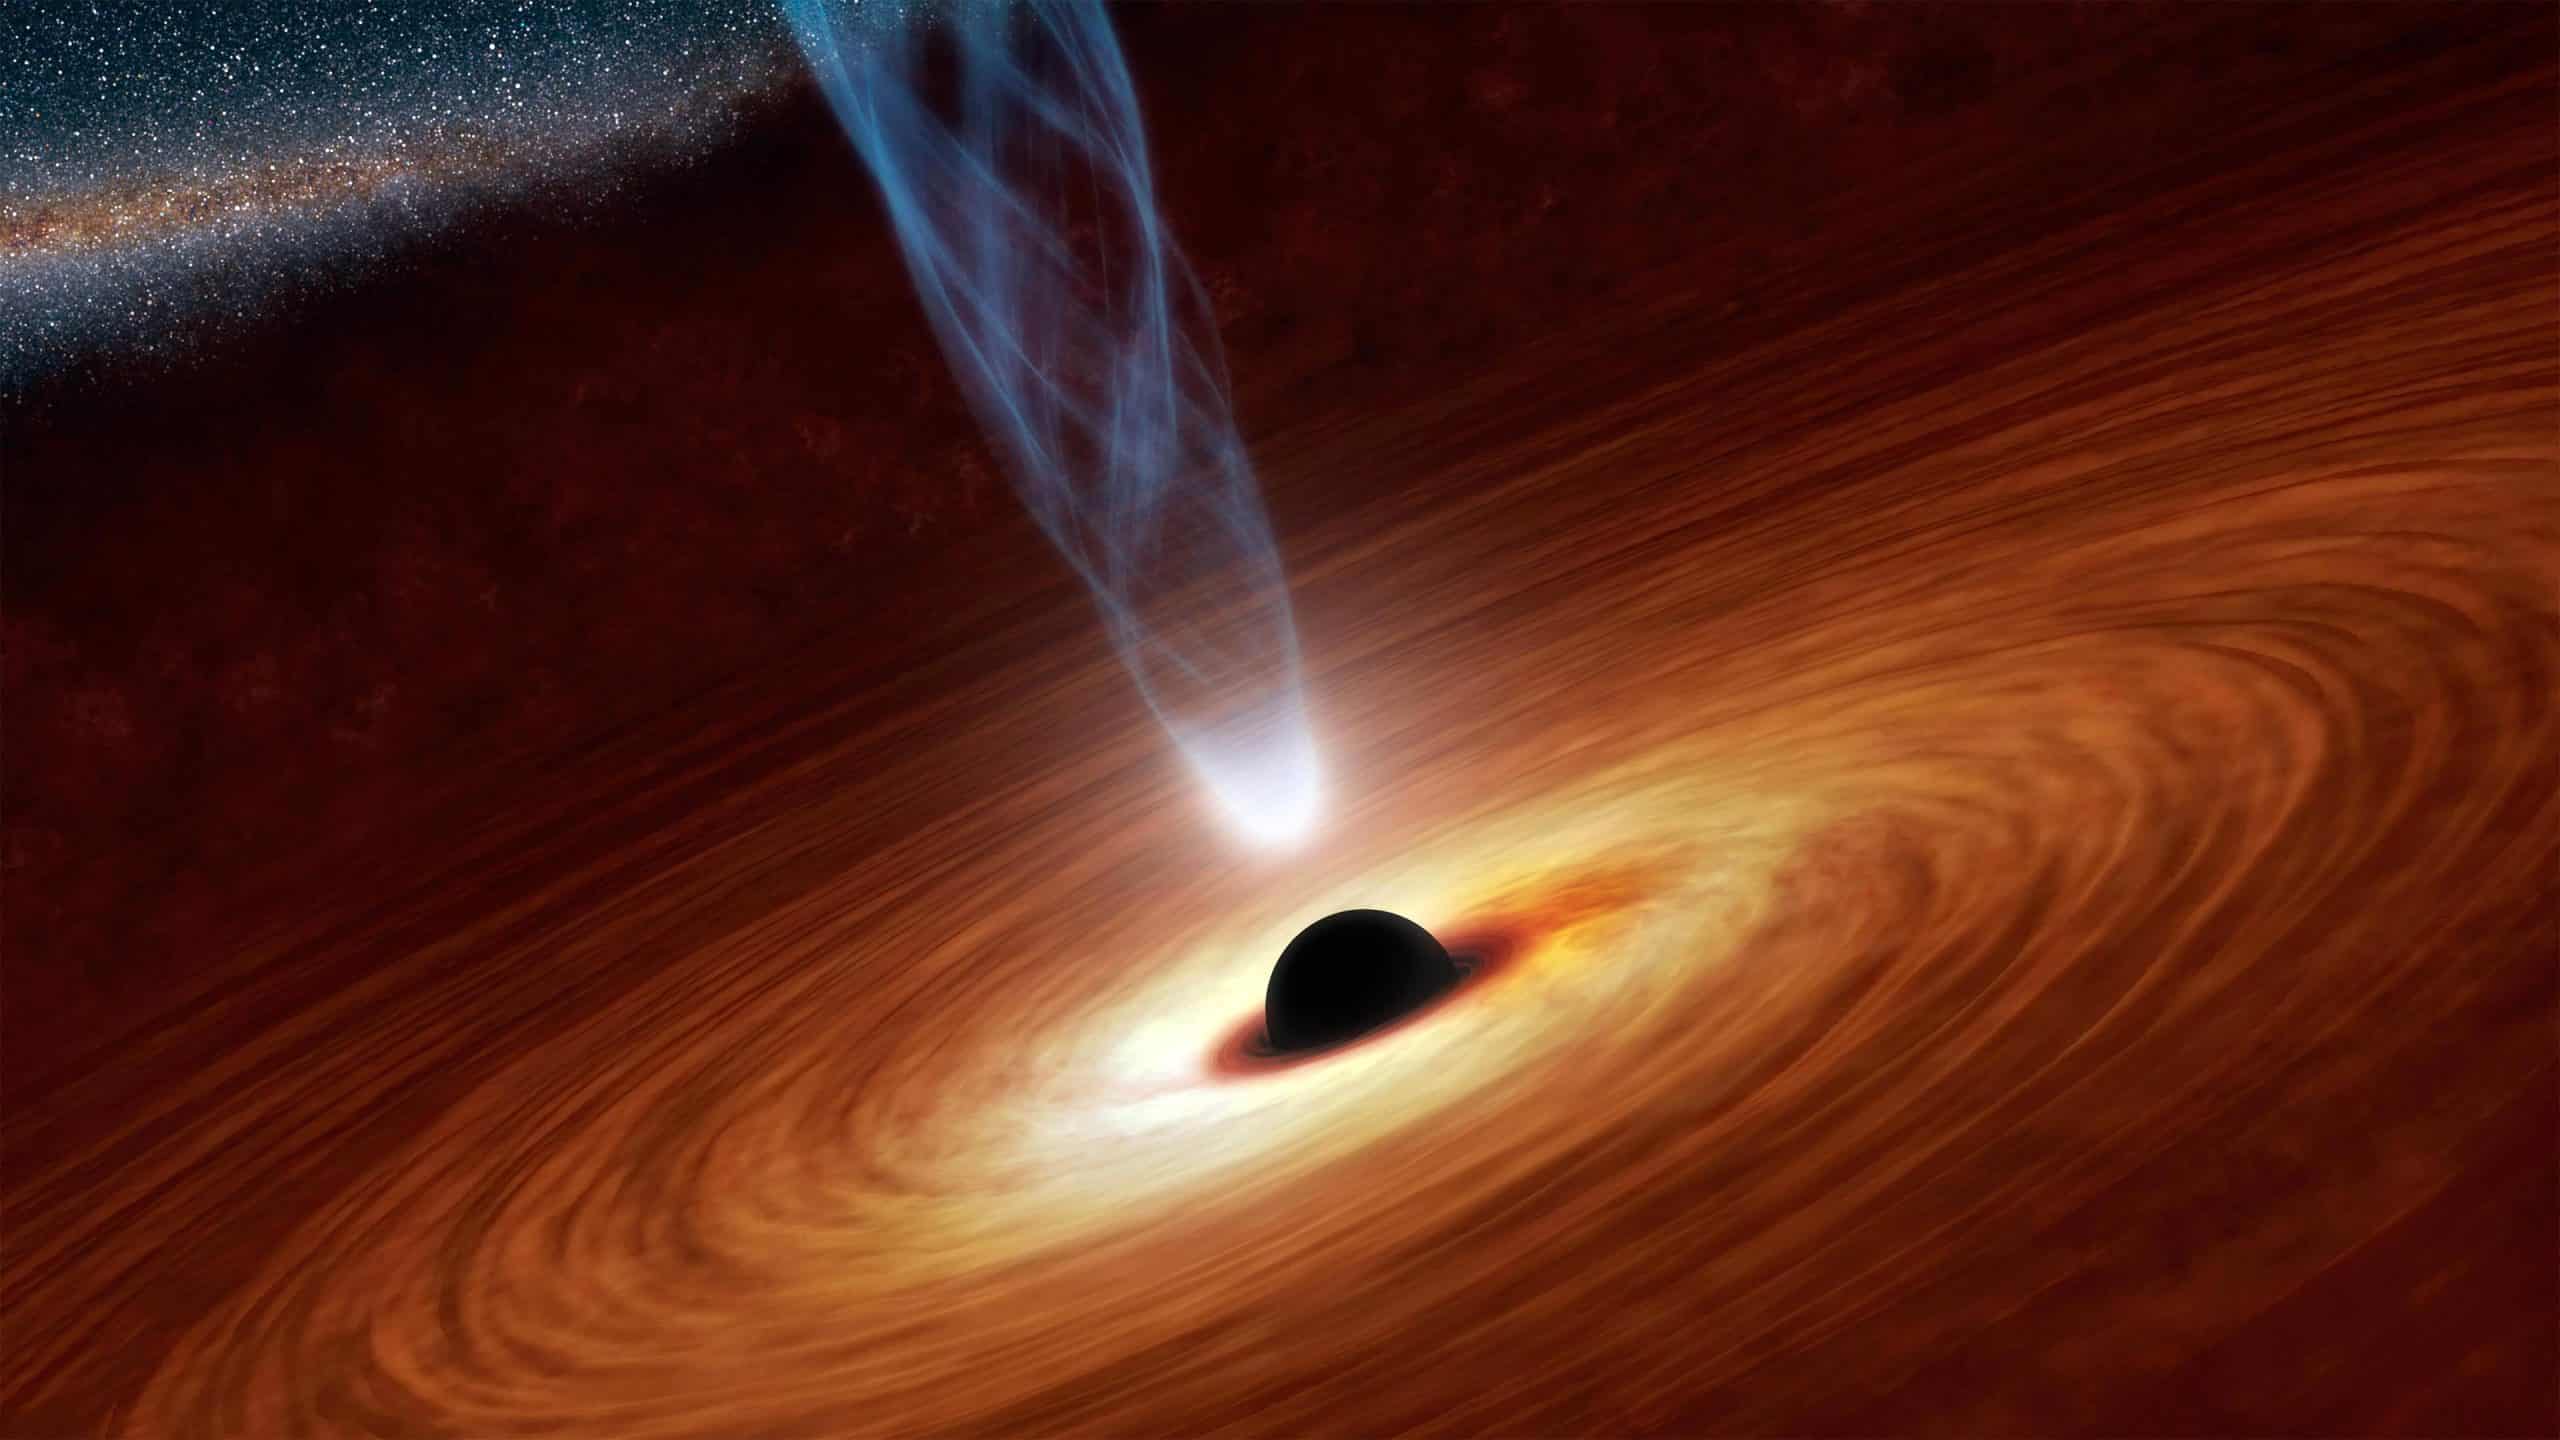 NASA releases audio recording of a black hole [Listen]